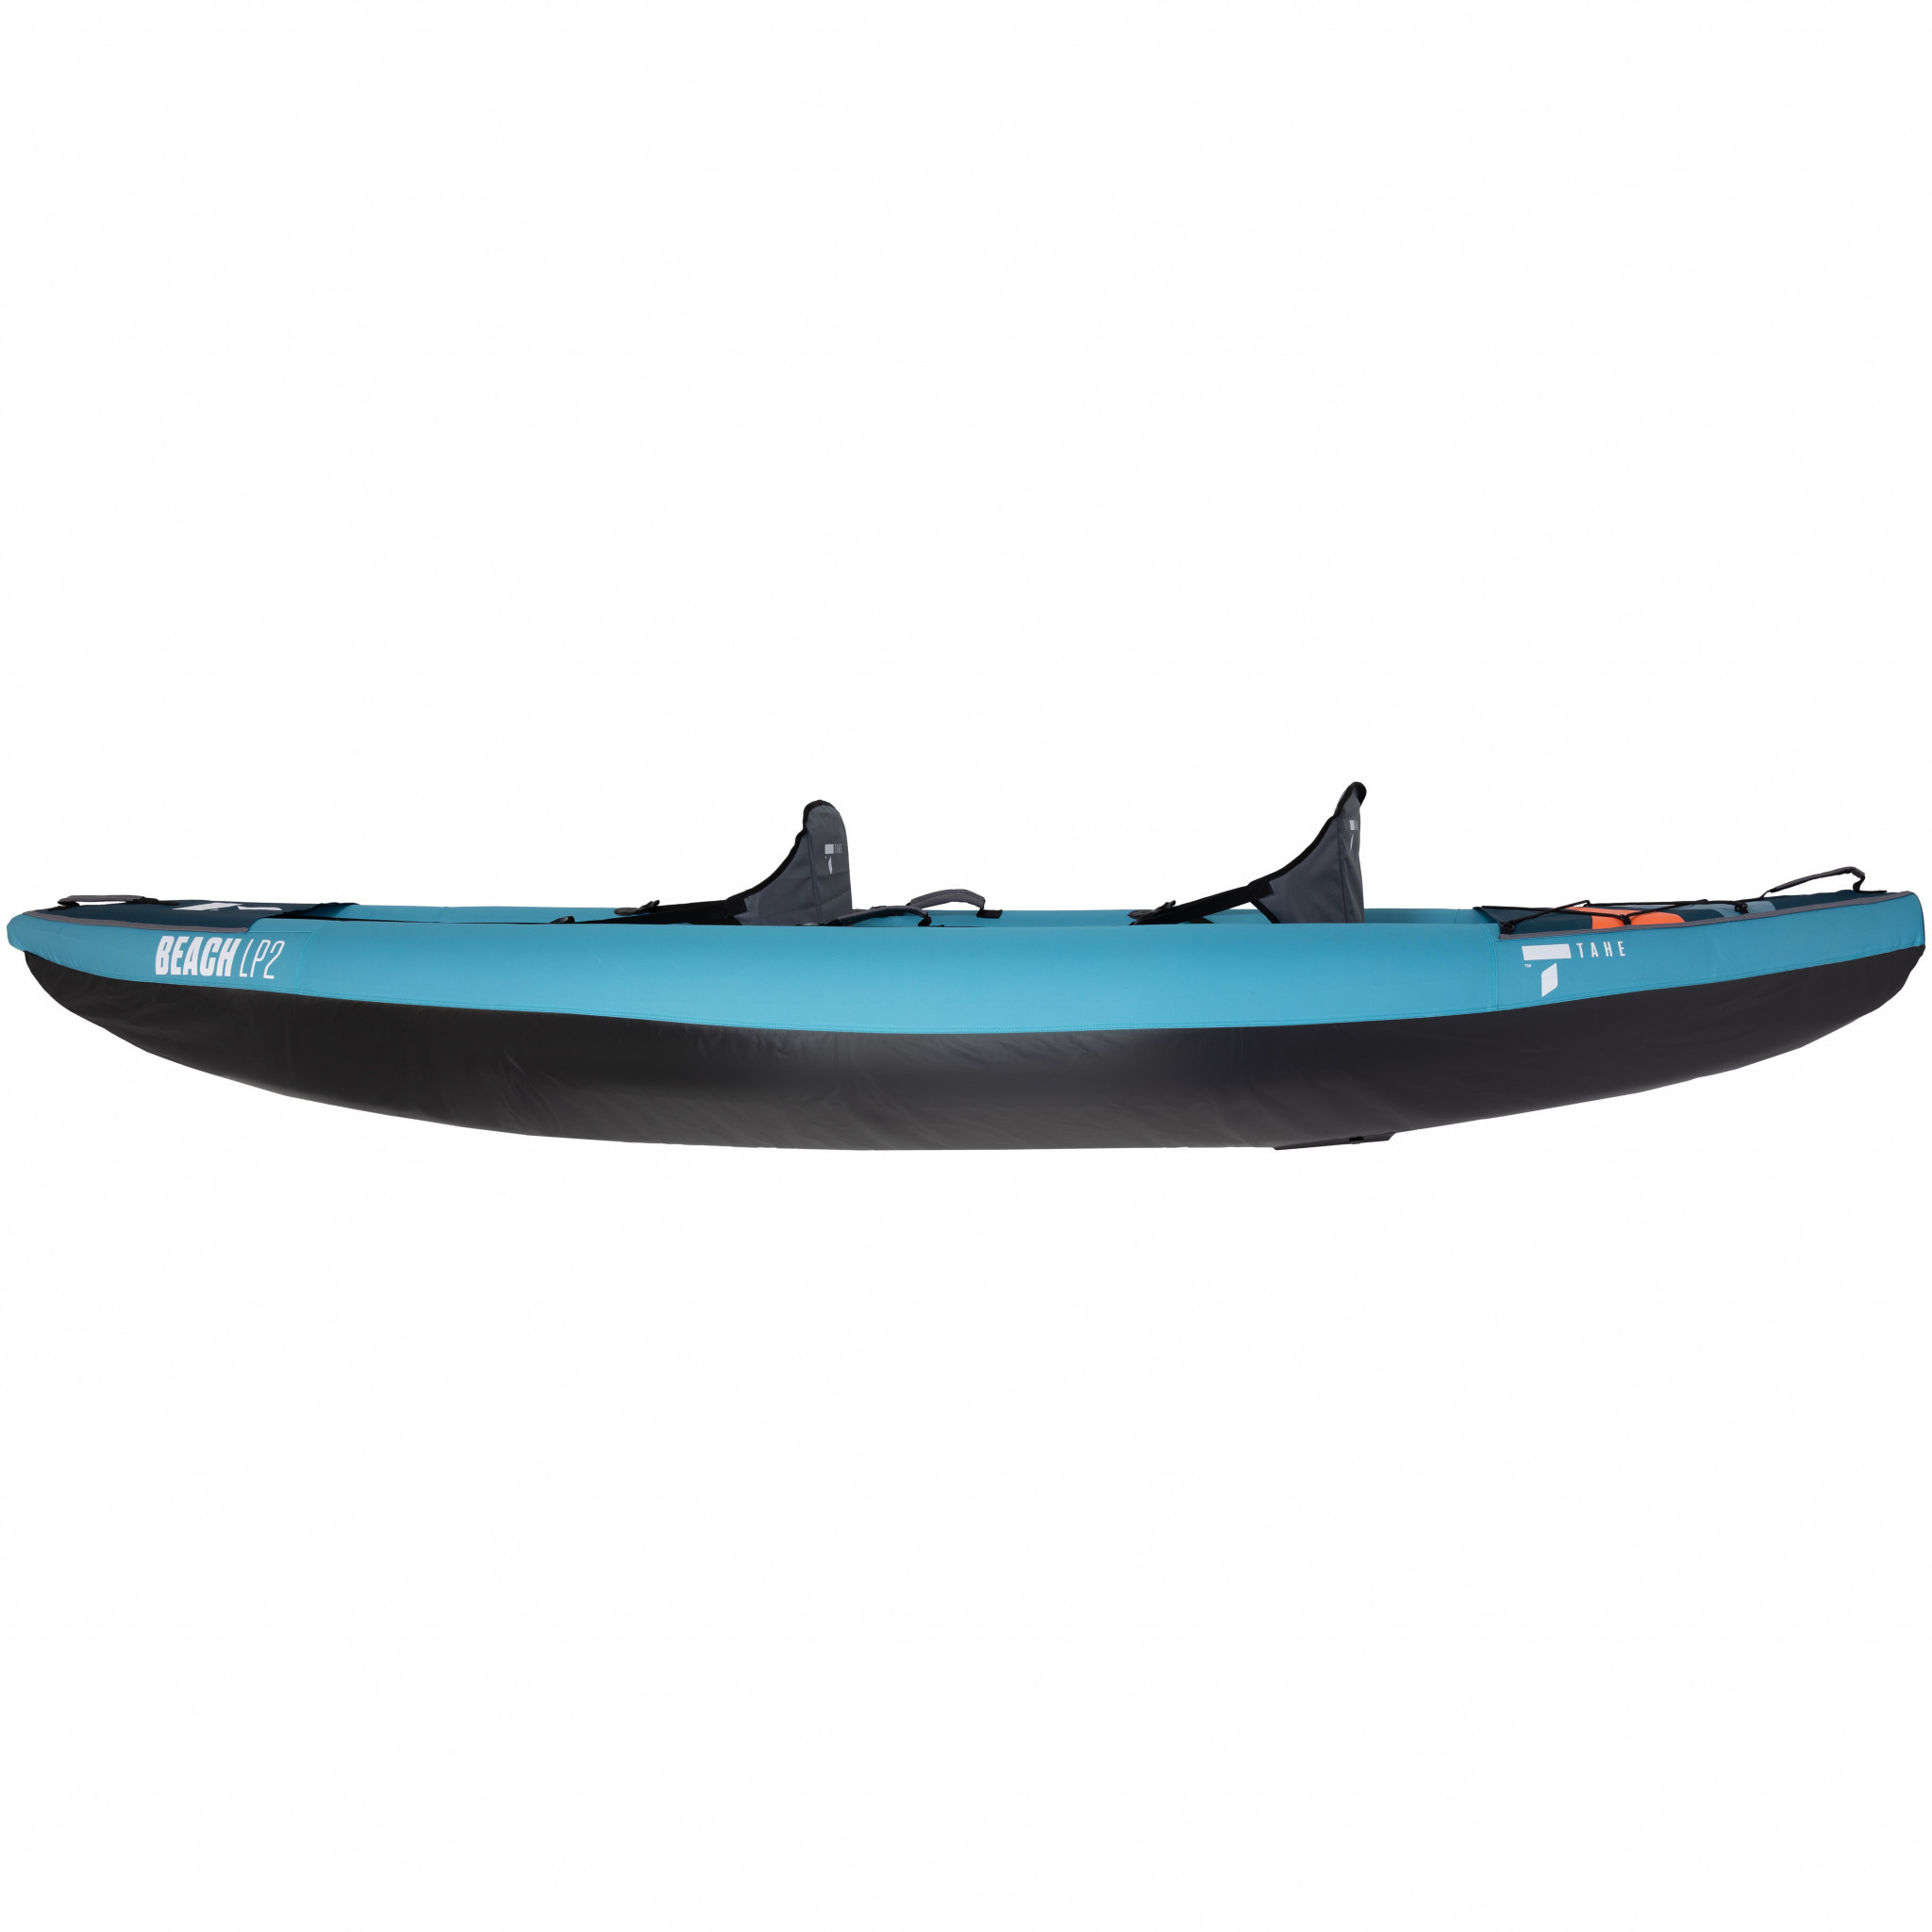 Beach LP2 Tandem Inflatable Kayak with Paddles